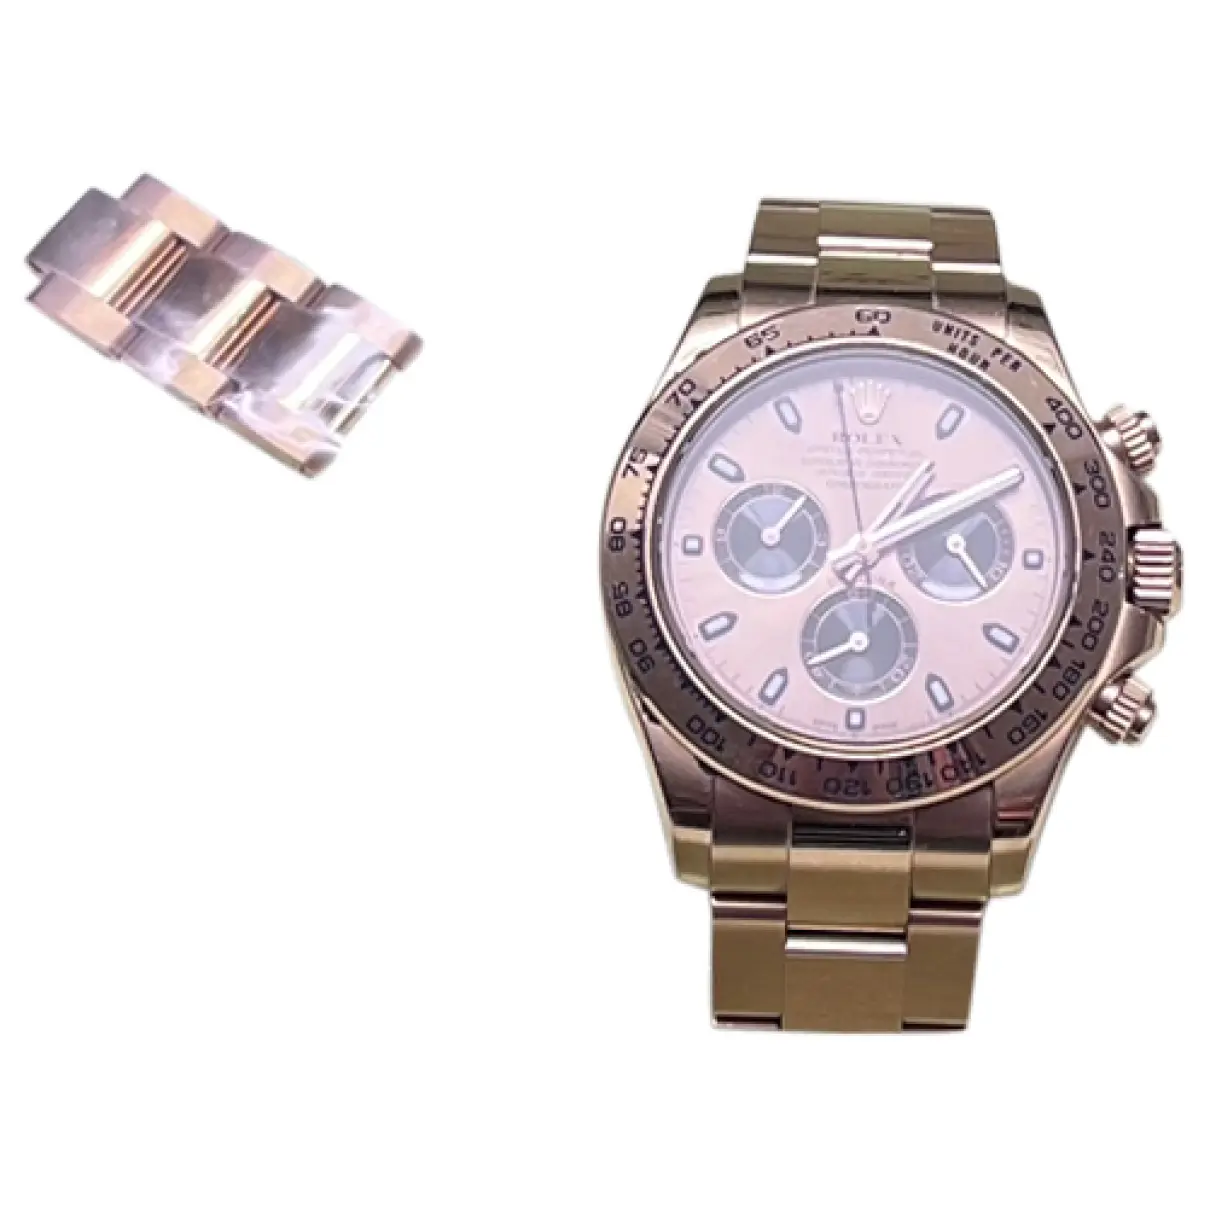 Daytona pink gold watch Rolex